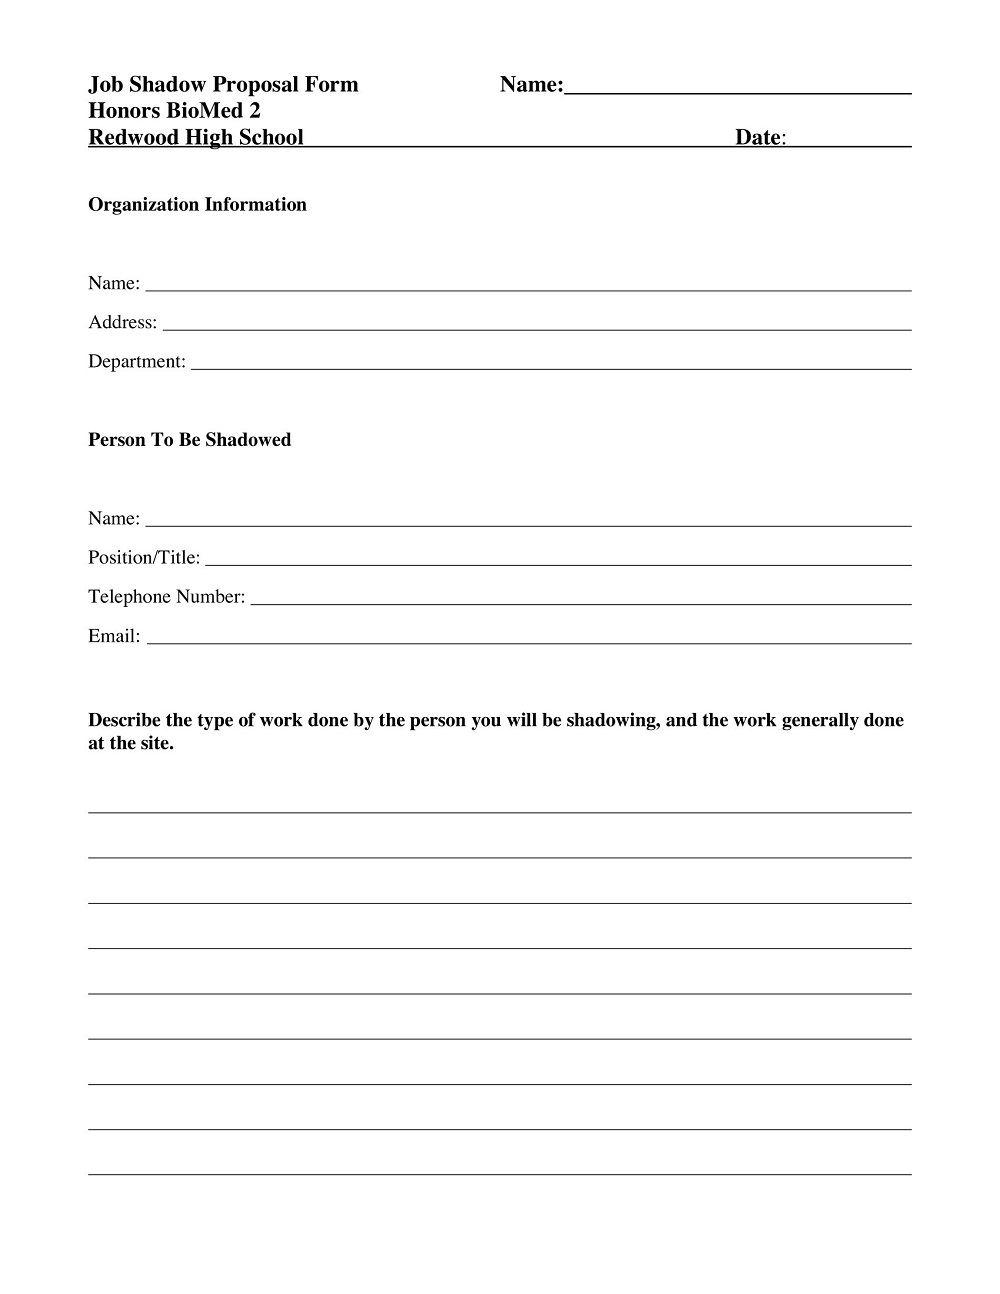 Job Proposal Form Template